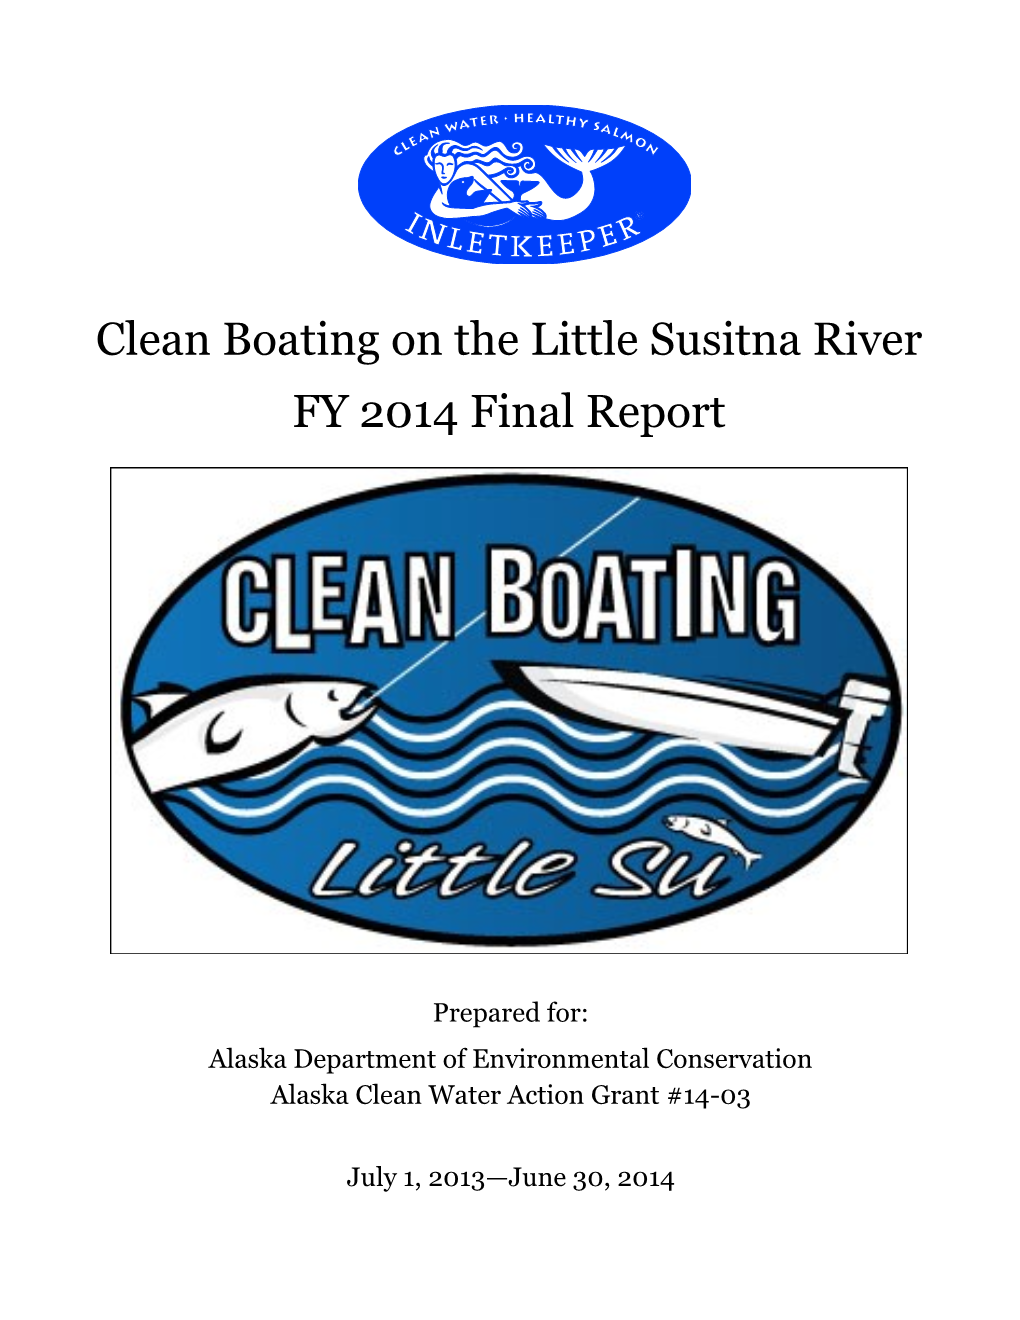 Little Susitna River FY 2014 Final Report